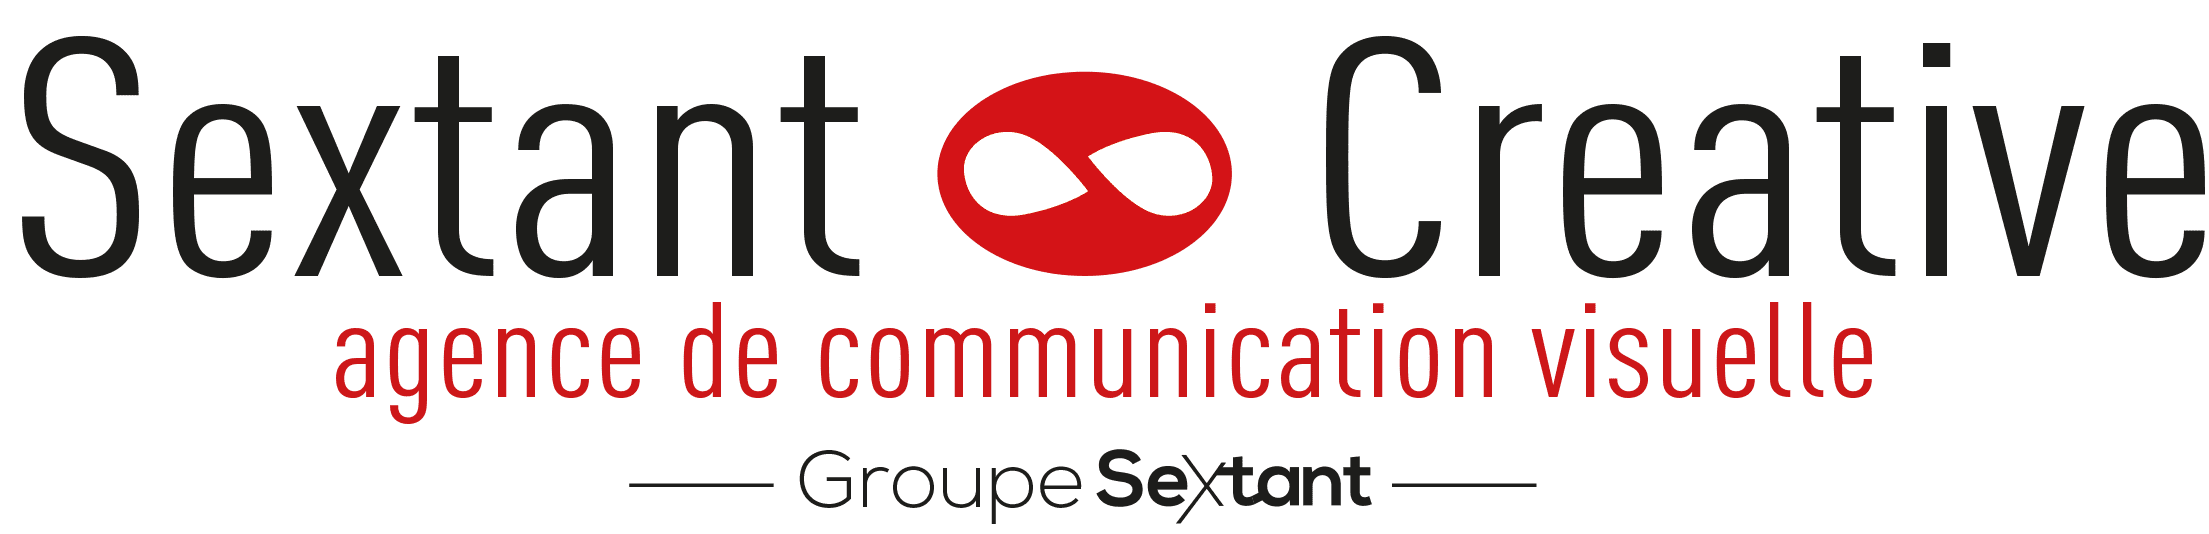 Sextant Creative du Groupe Sextant